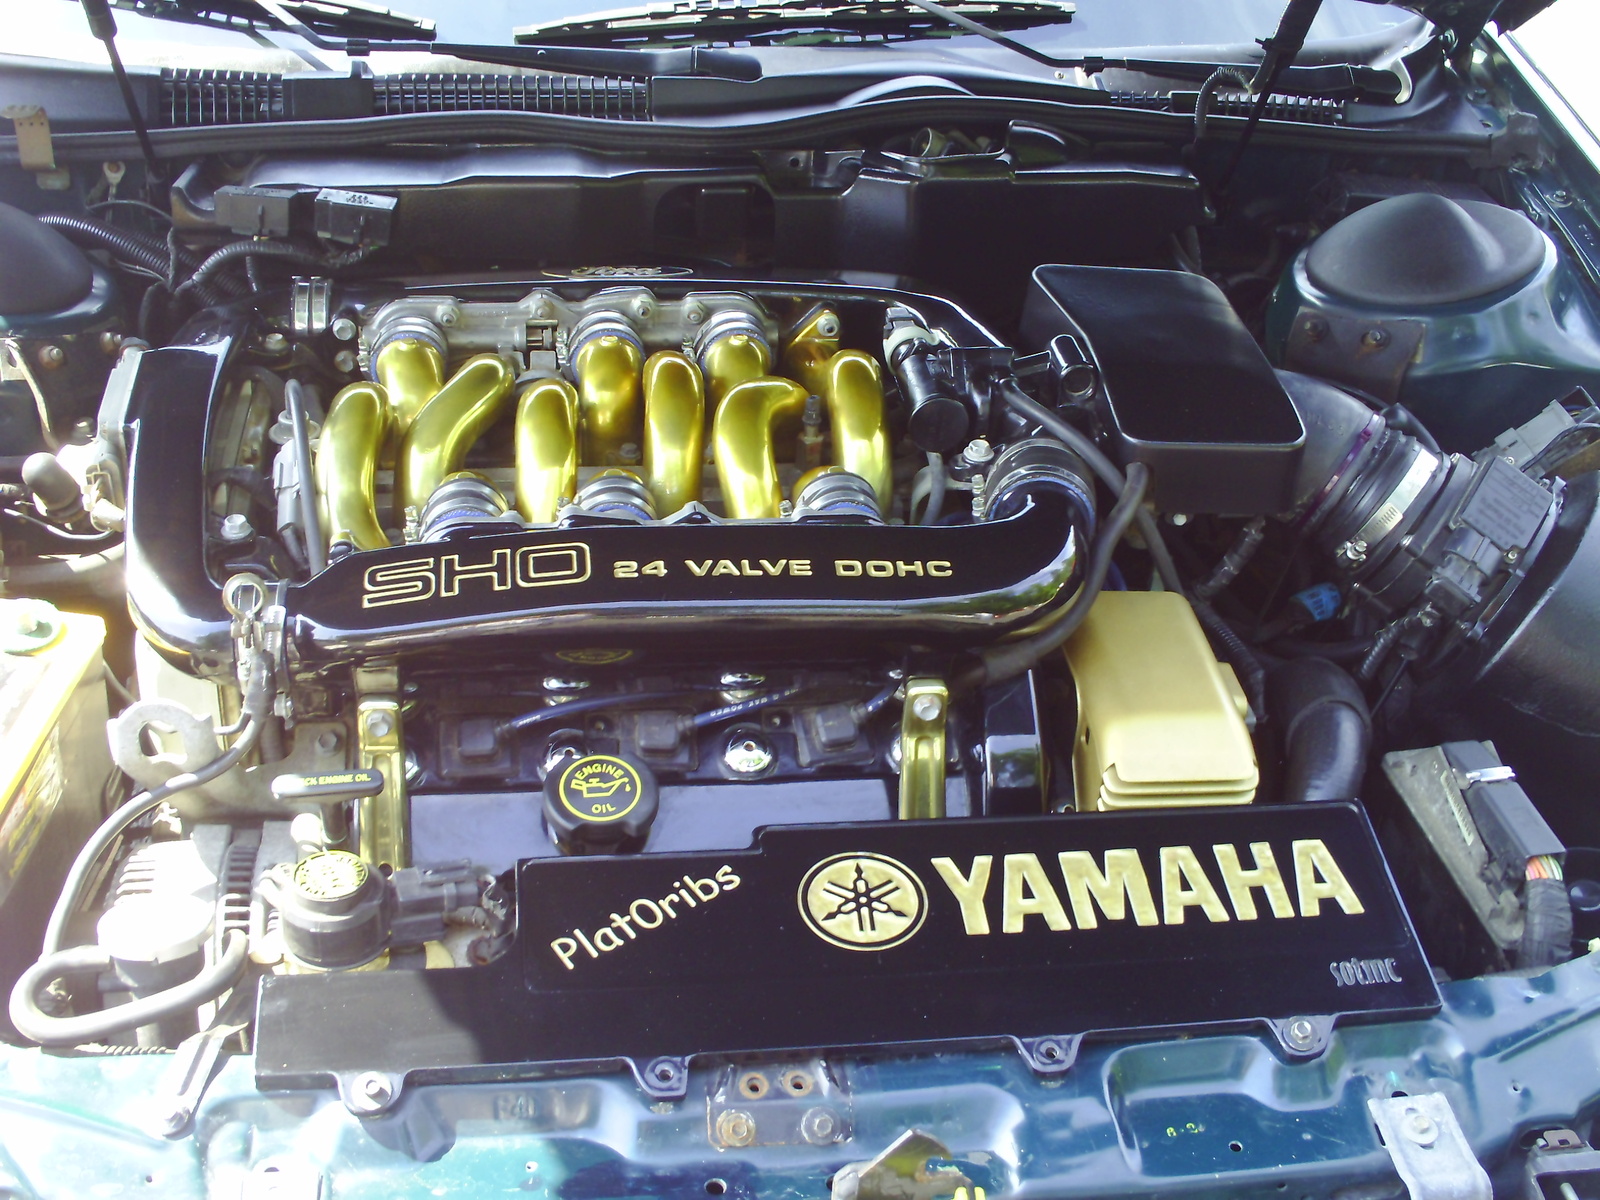 Ford taurus sho with yamaha engine #4